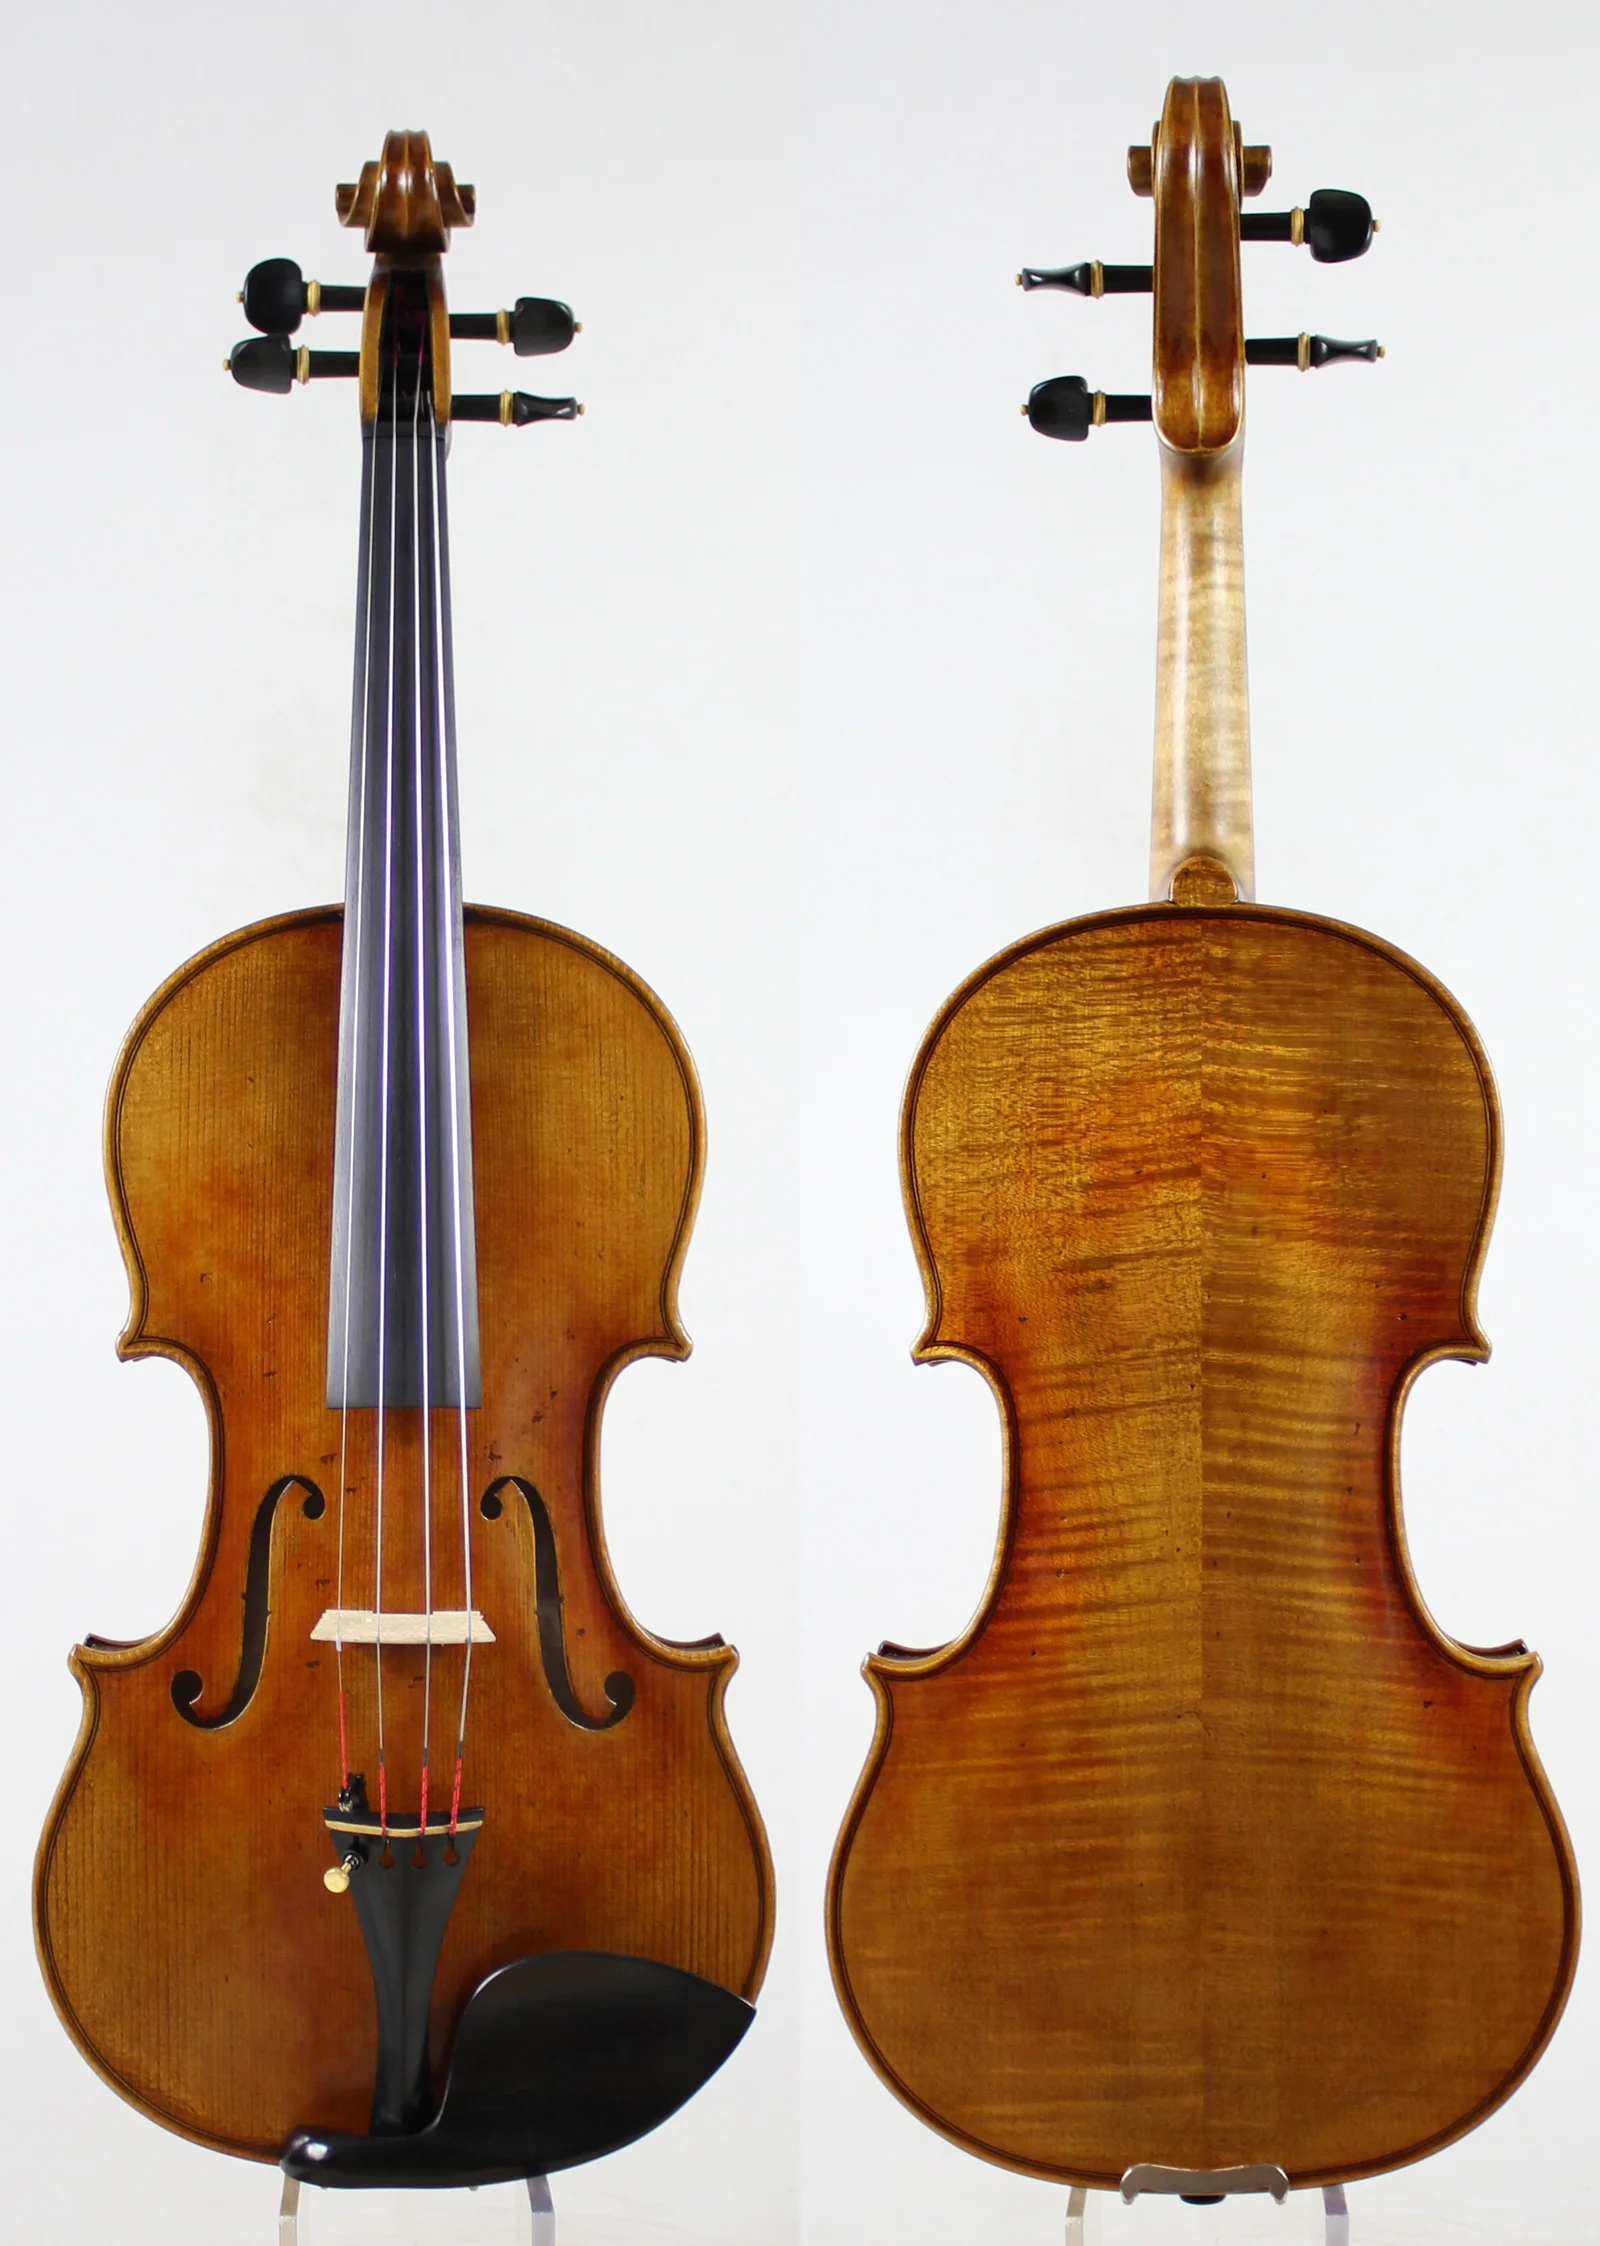 Левша Stradivarius Kruse 1721 скрипка o "All European Wood" Лучший тон